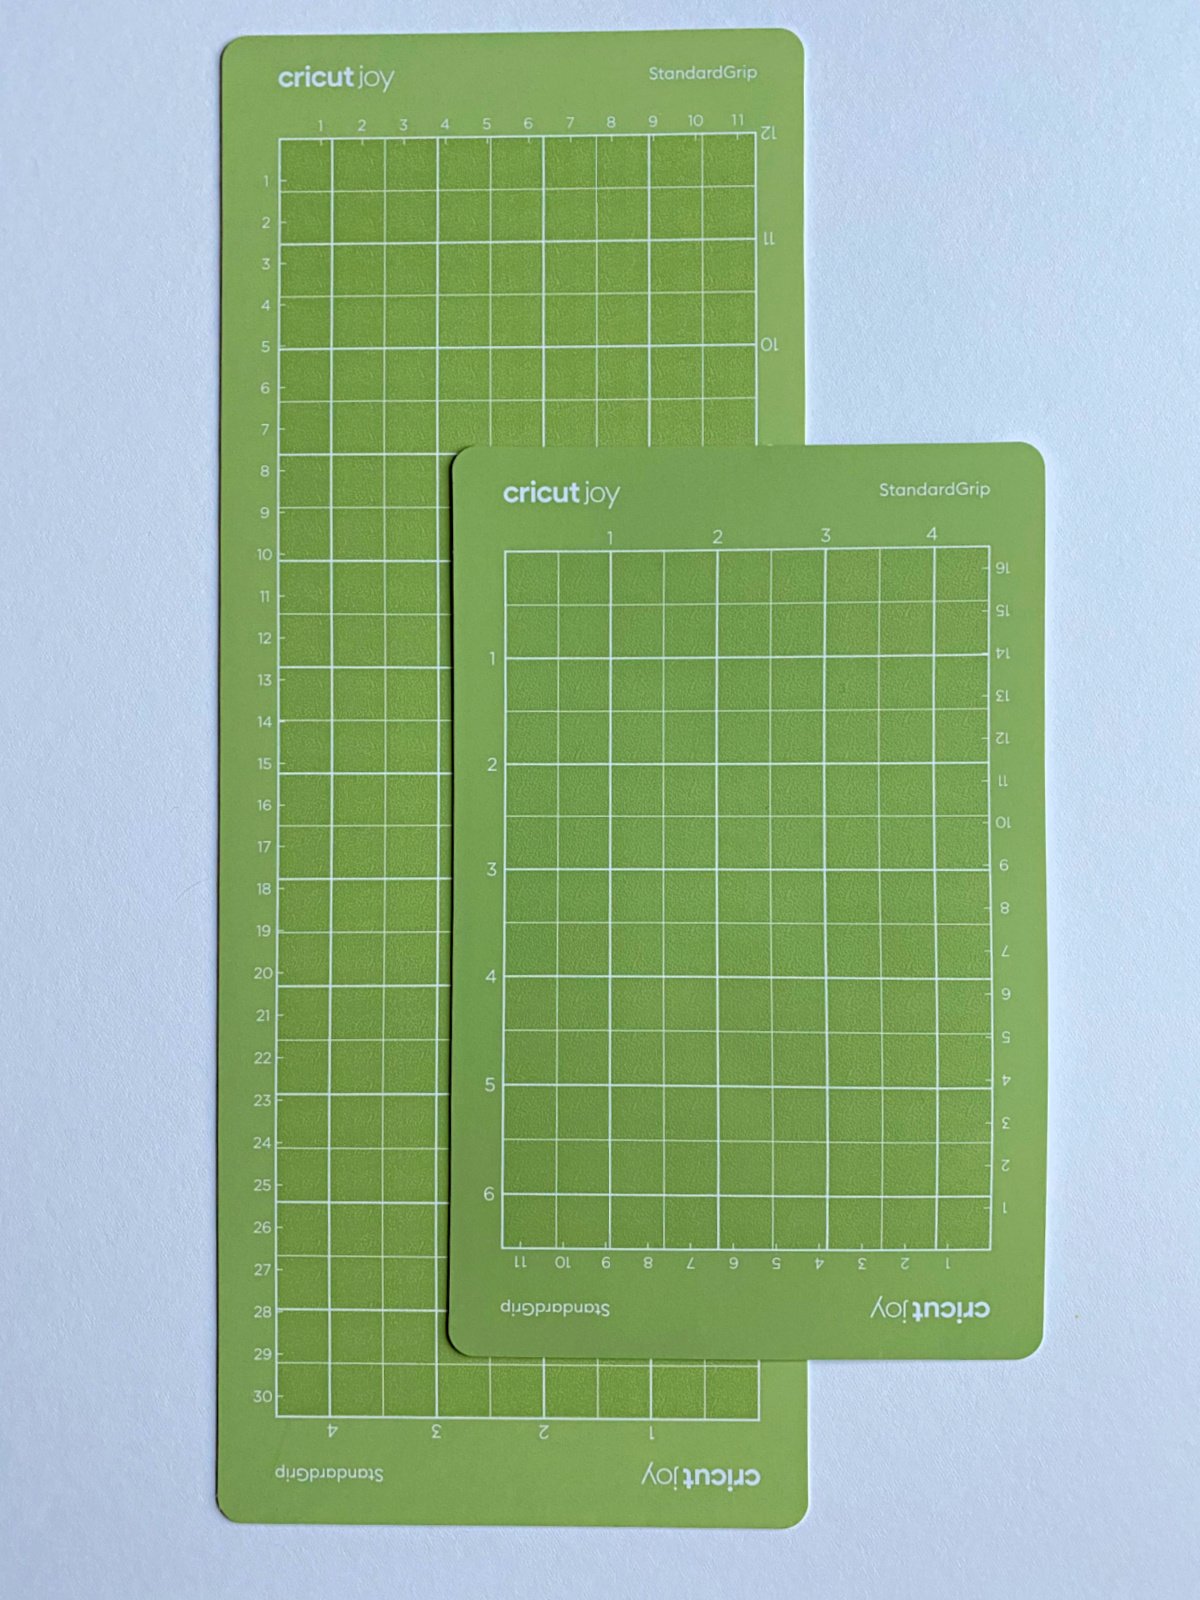 Two Cricut Joy StandardGrip bright green mats on a white surface.